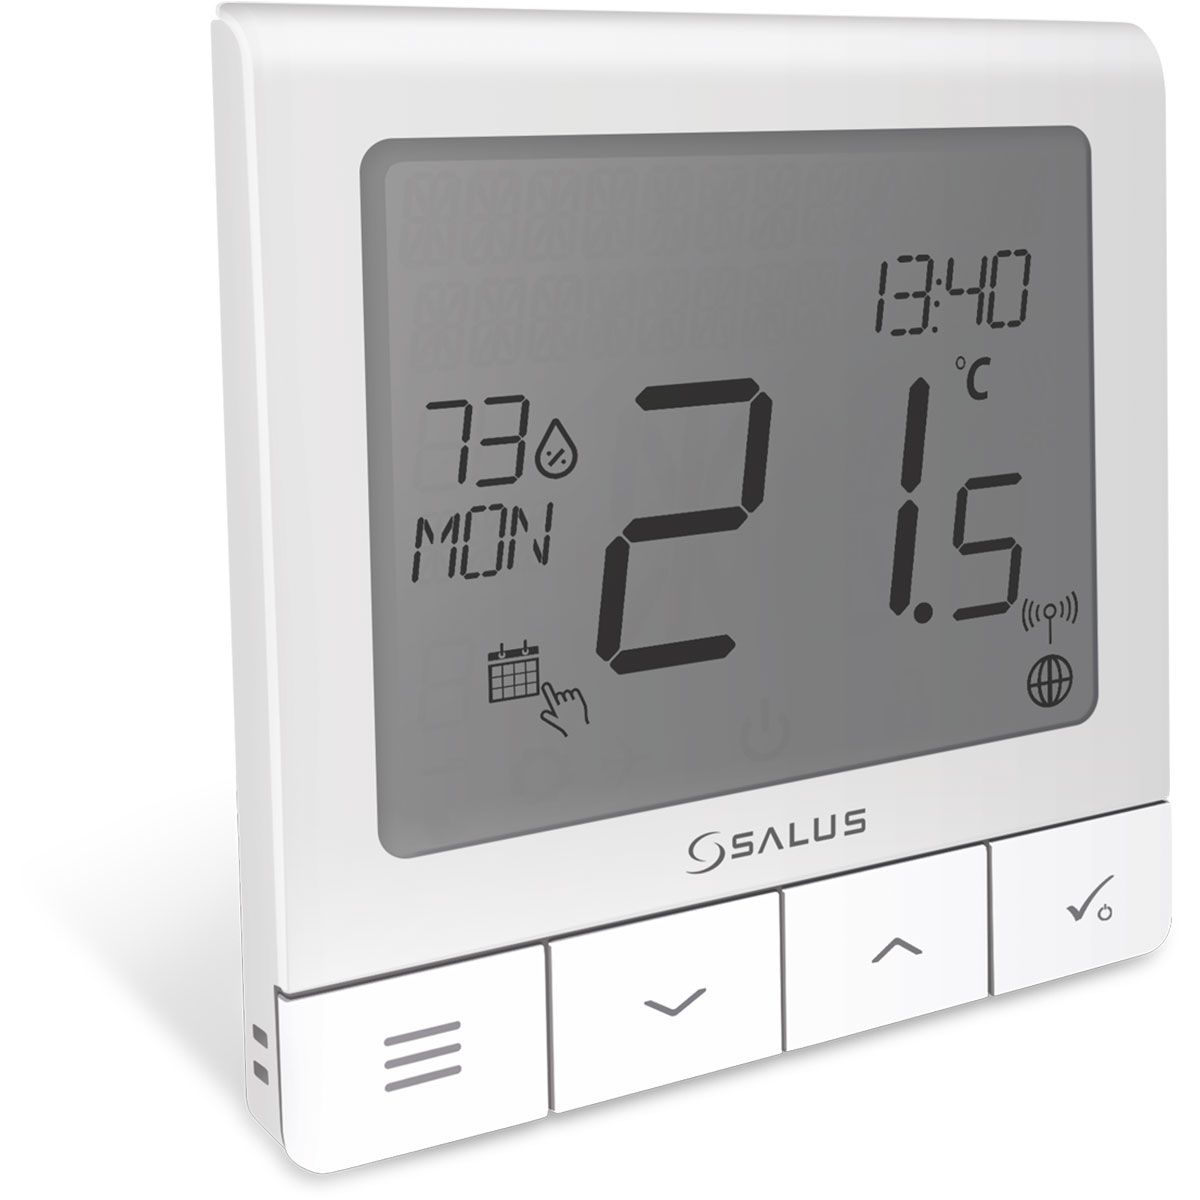 2 in1 Digital Auto UHR Temperatur Thermometer LCD Display Klimaanlage  Lüftung